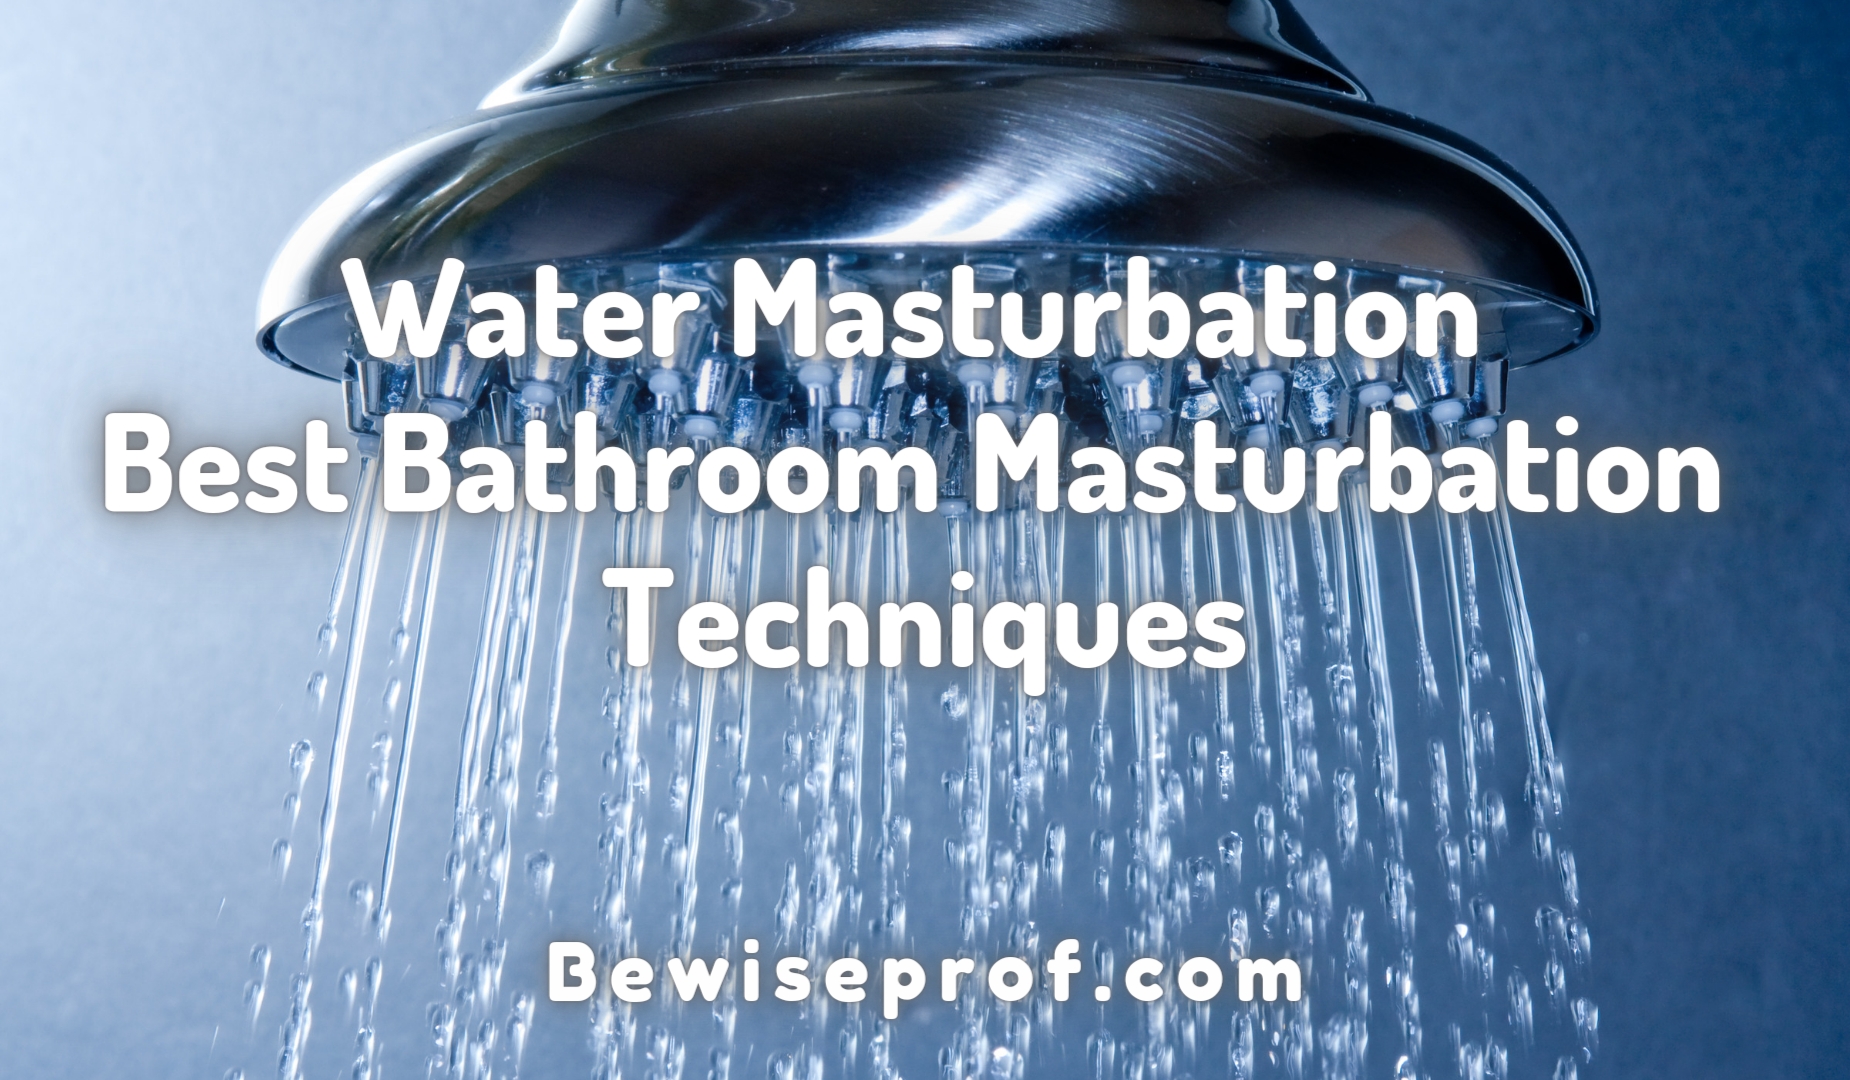 Water Masturbation Best Bathroom Masturbation Techniques To Enjoy It Be Wise Professor